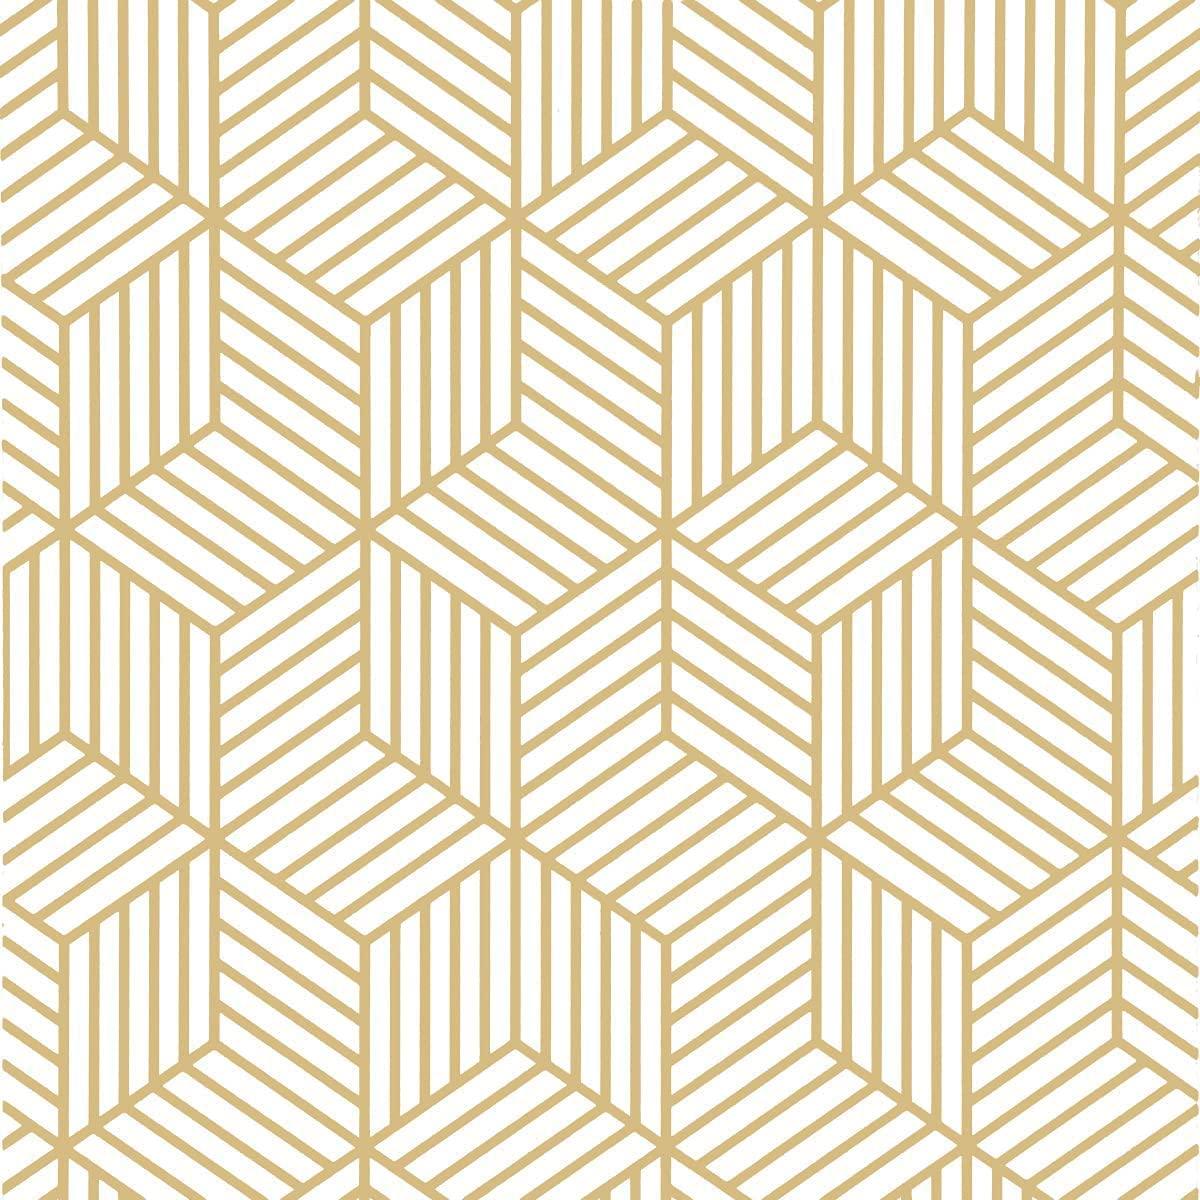 Zara Shimmer Metallic wallpaper in white & gold